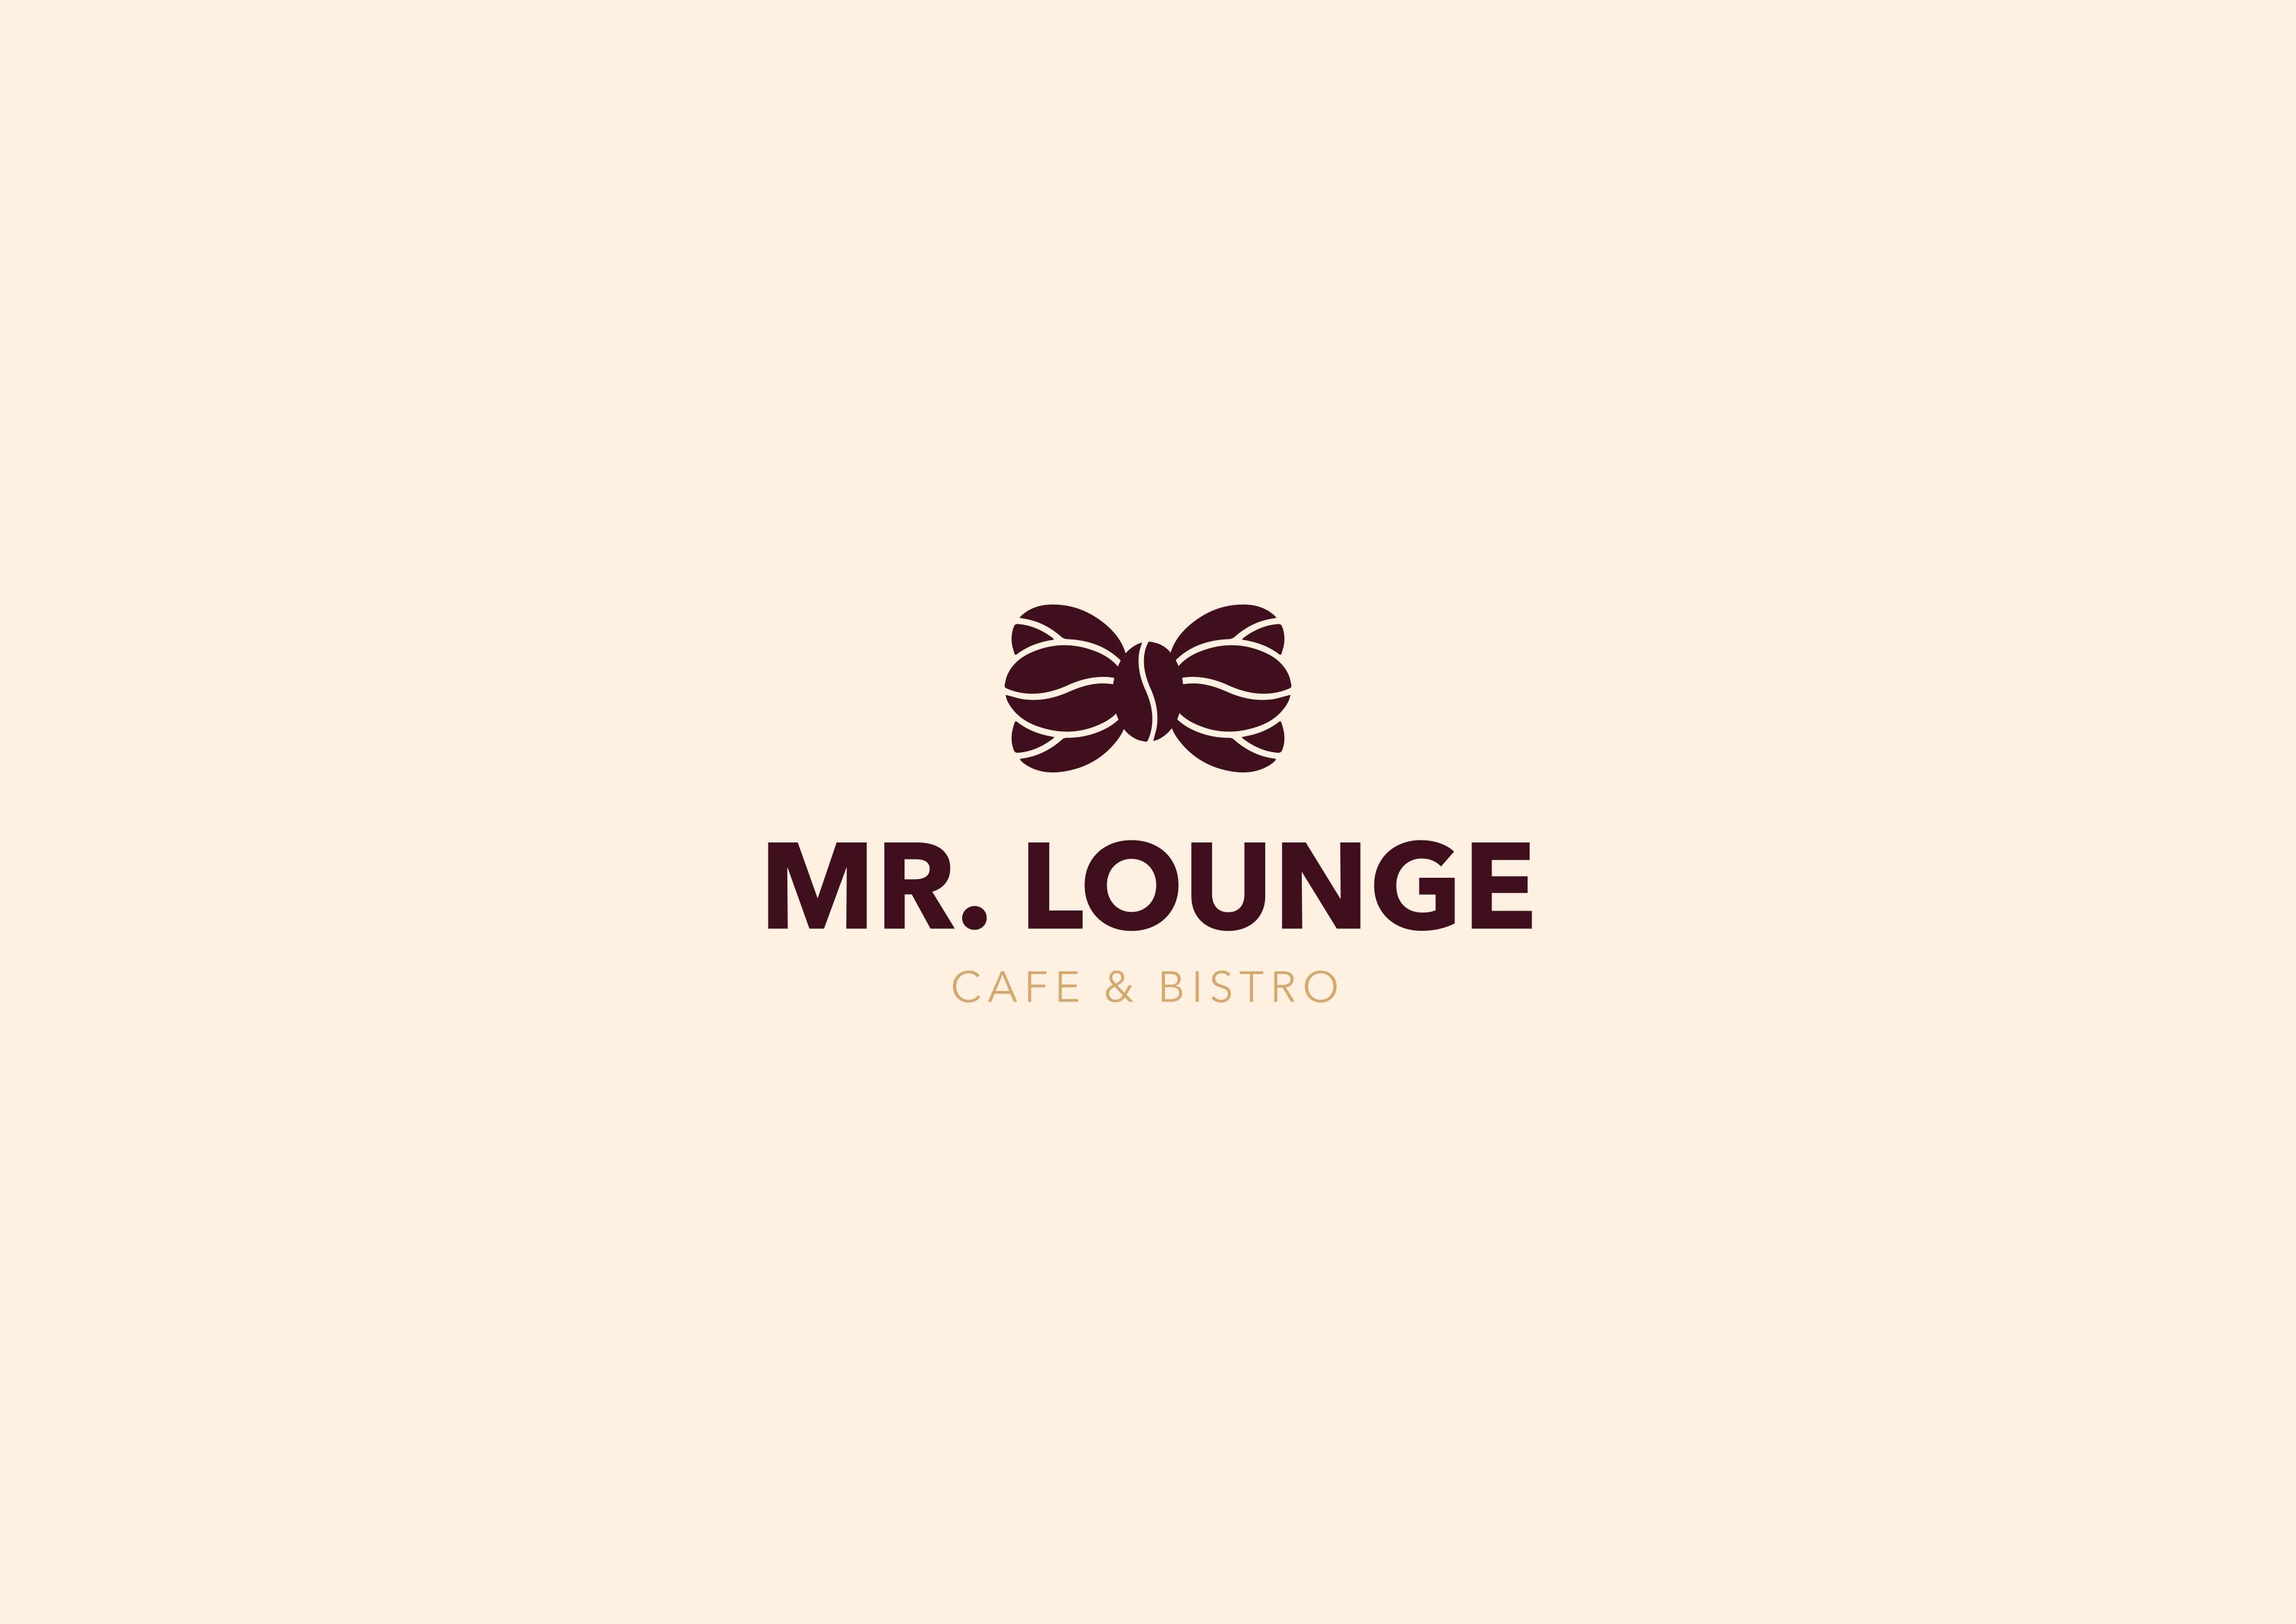 Mr. Lounge